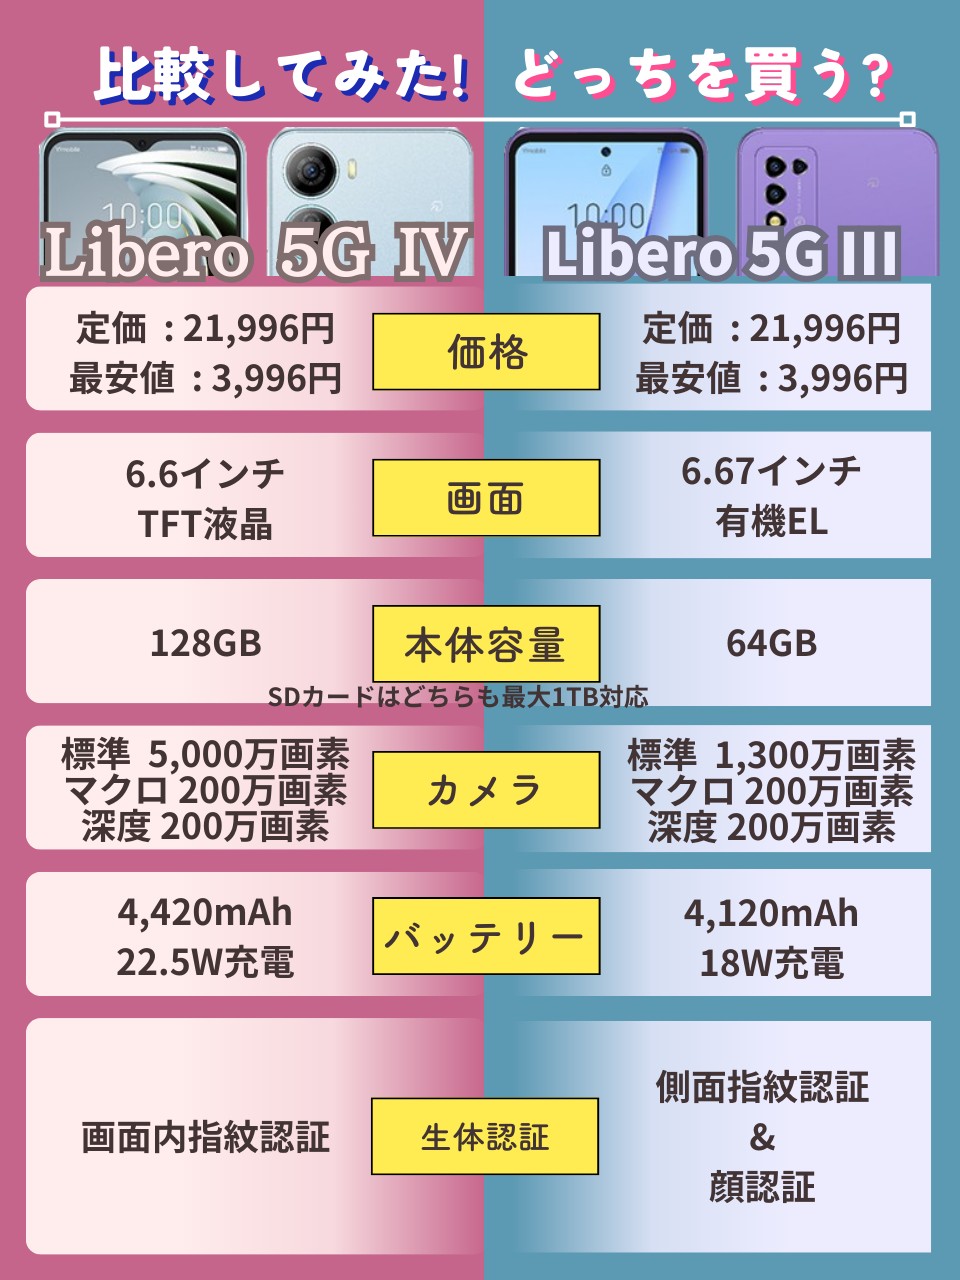 Libero 5G IV_vs_Libero 5G III